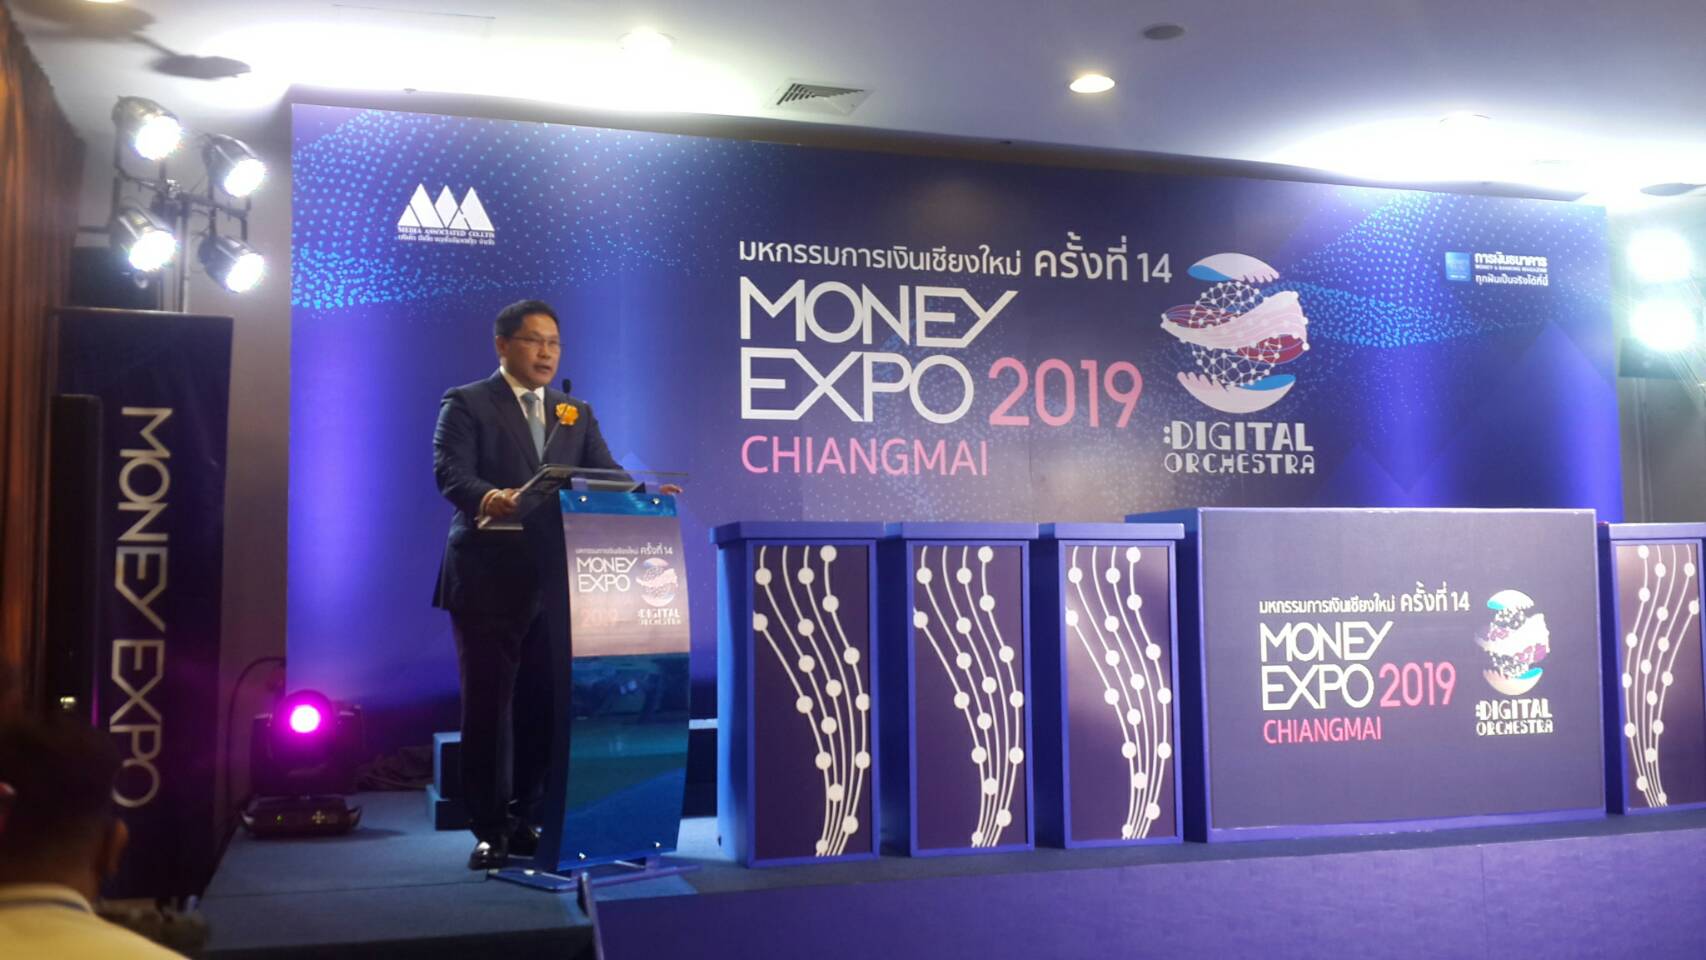 Money Expo Chiangmai 2019แข่งโปรโมชั่นแรงส่งท้ายปีเพื่อชาวเหนือ  เงินกู้ดอกเบี้ย 0% ซื้อประกันรับทองคำแท่ง 20 บาท